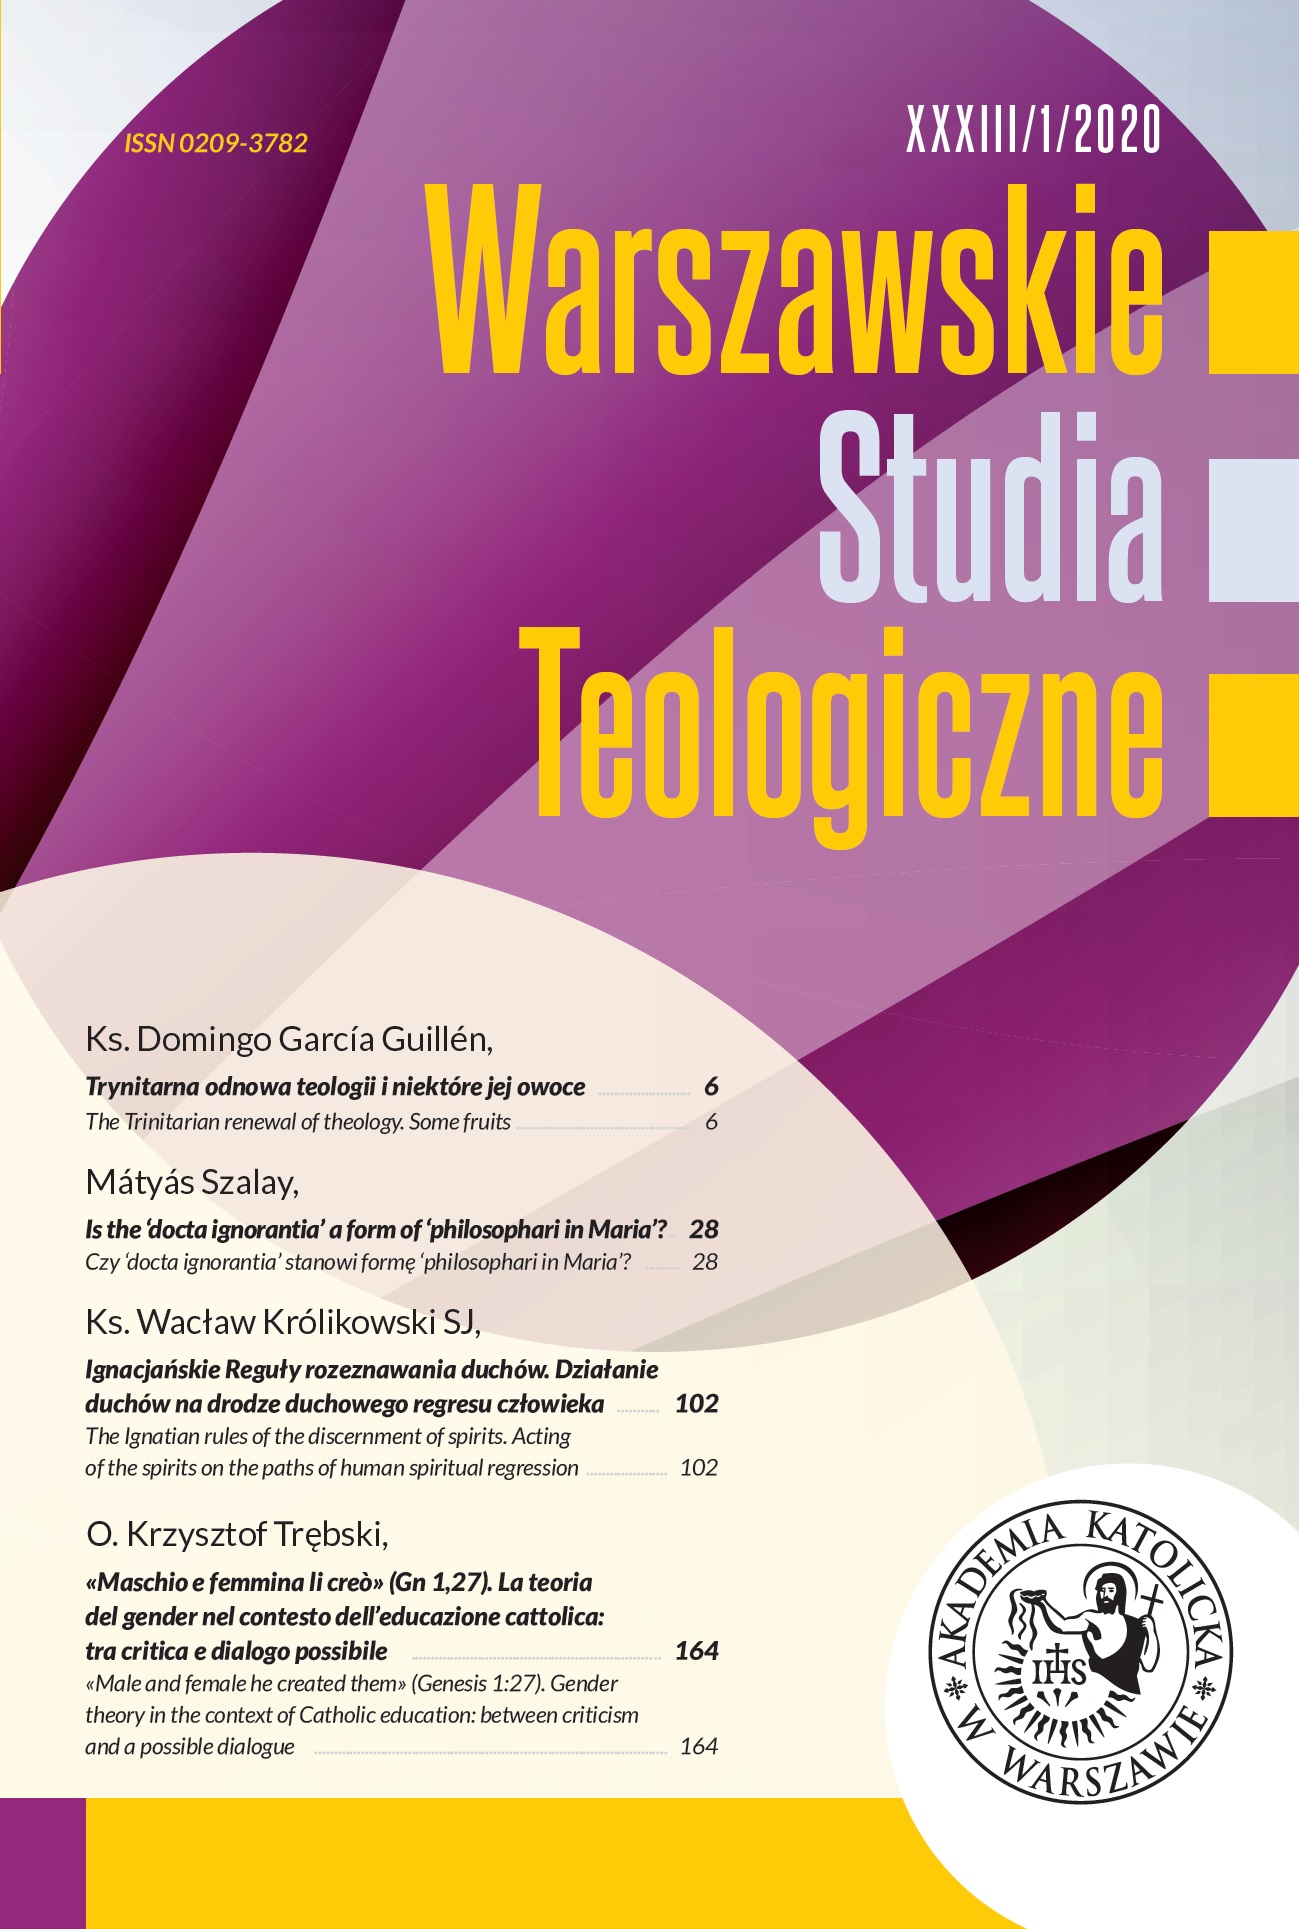 Book review: P. Duchliński, A. Kobyliński, R. Moń, E. Podrez, Ethics and the problem of nihilism, Academic Publishing House of the Ignatianum Academy, Kraków 2019, pp. 259 Cover Image